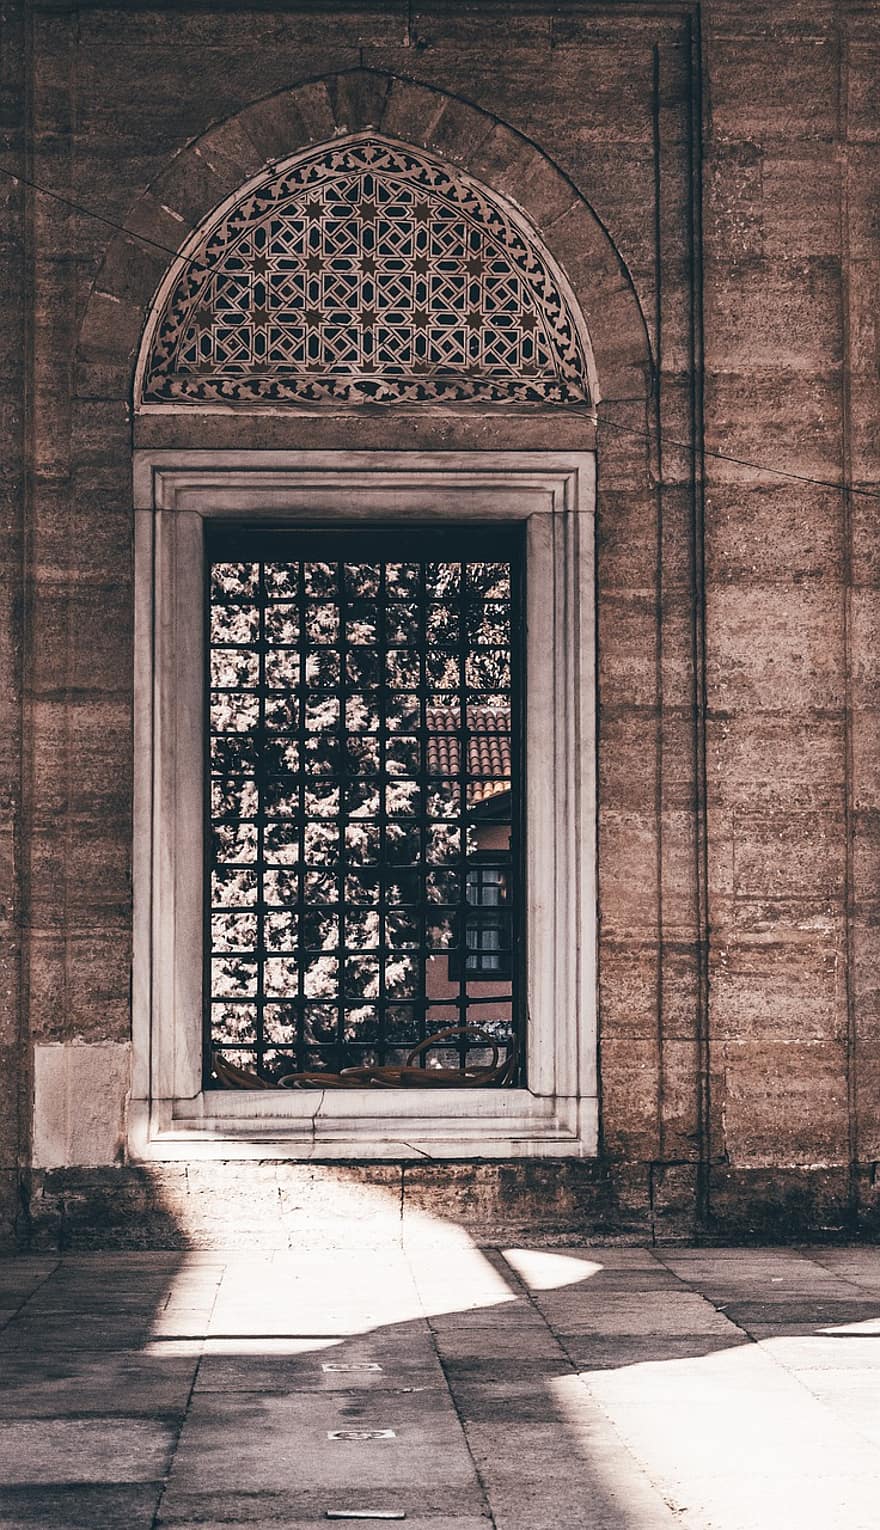 Window, Mosque, Architecture, Islam, Turkey, Religion, Date, Travel, City, Historical